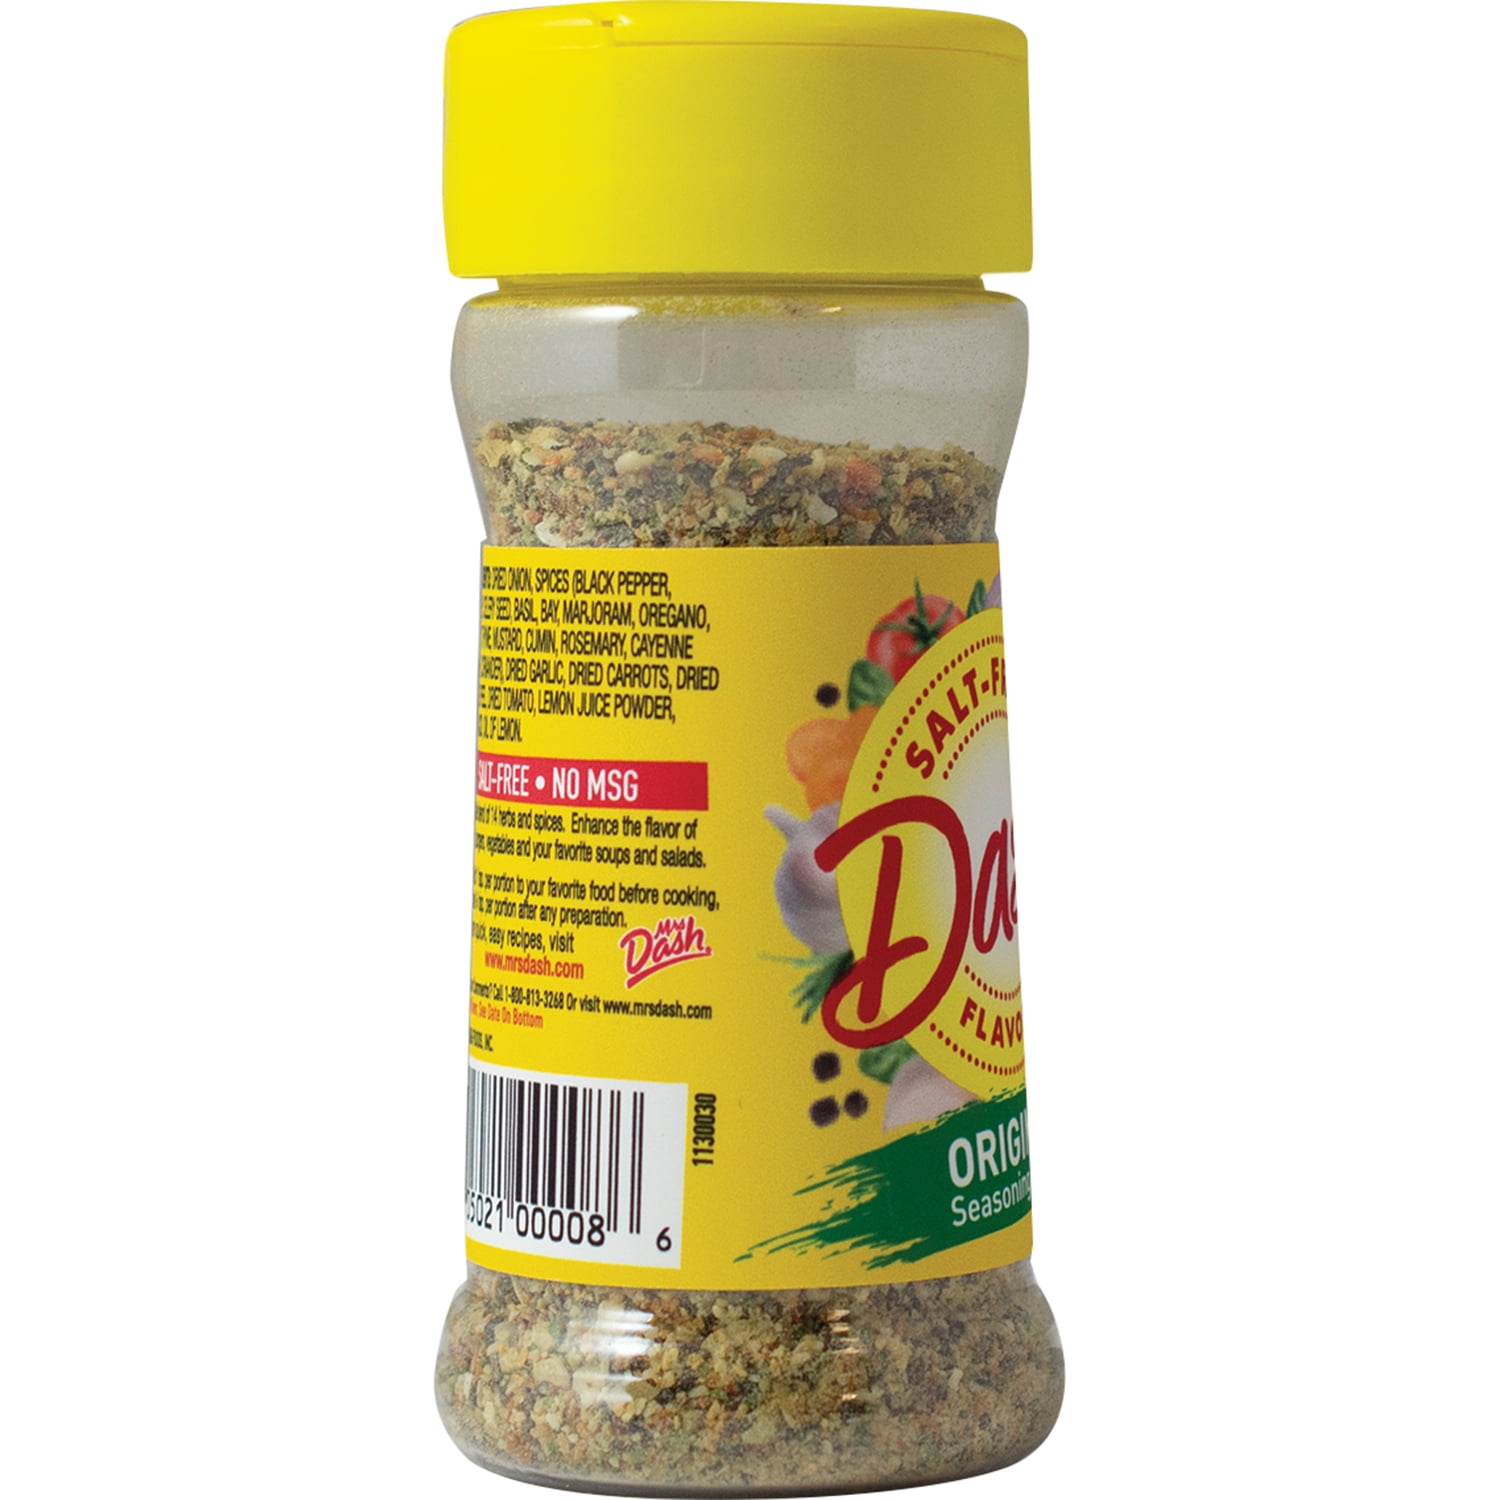 Mrs. Dash 00008 Salt-Free 2.5 oz. Original Seasoning Blend (Pack of 3); Versatile Blend of 14 Herbs and Spices; Enhance The Flavor of Chicken, Burgers